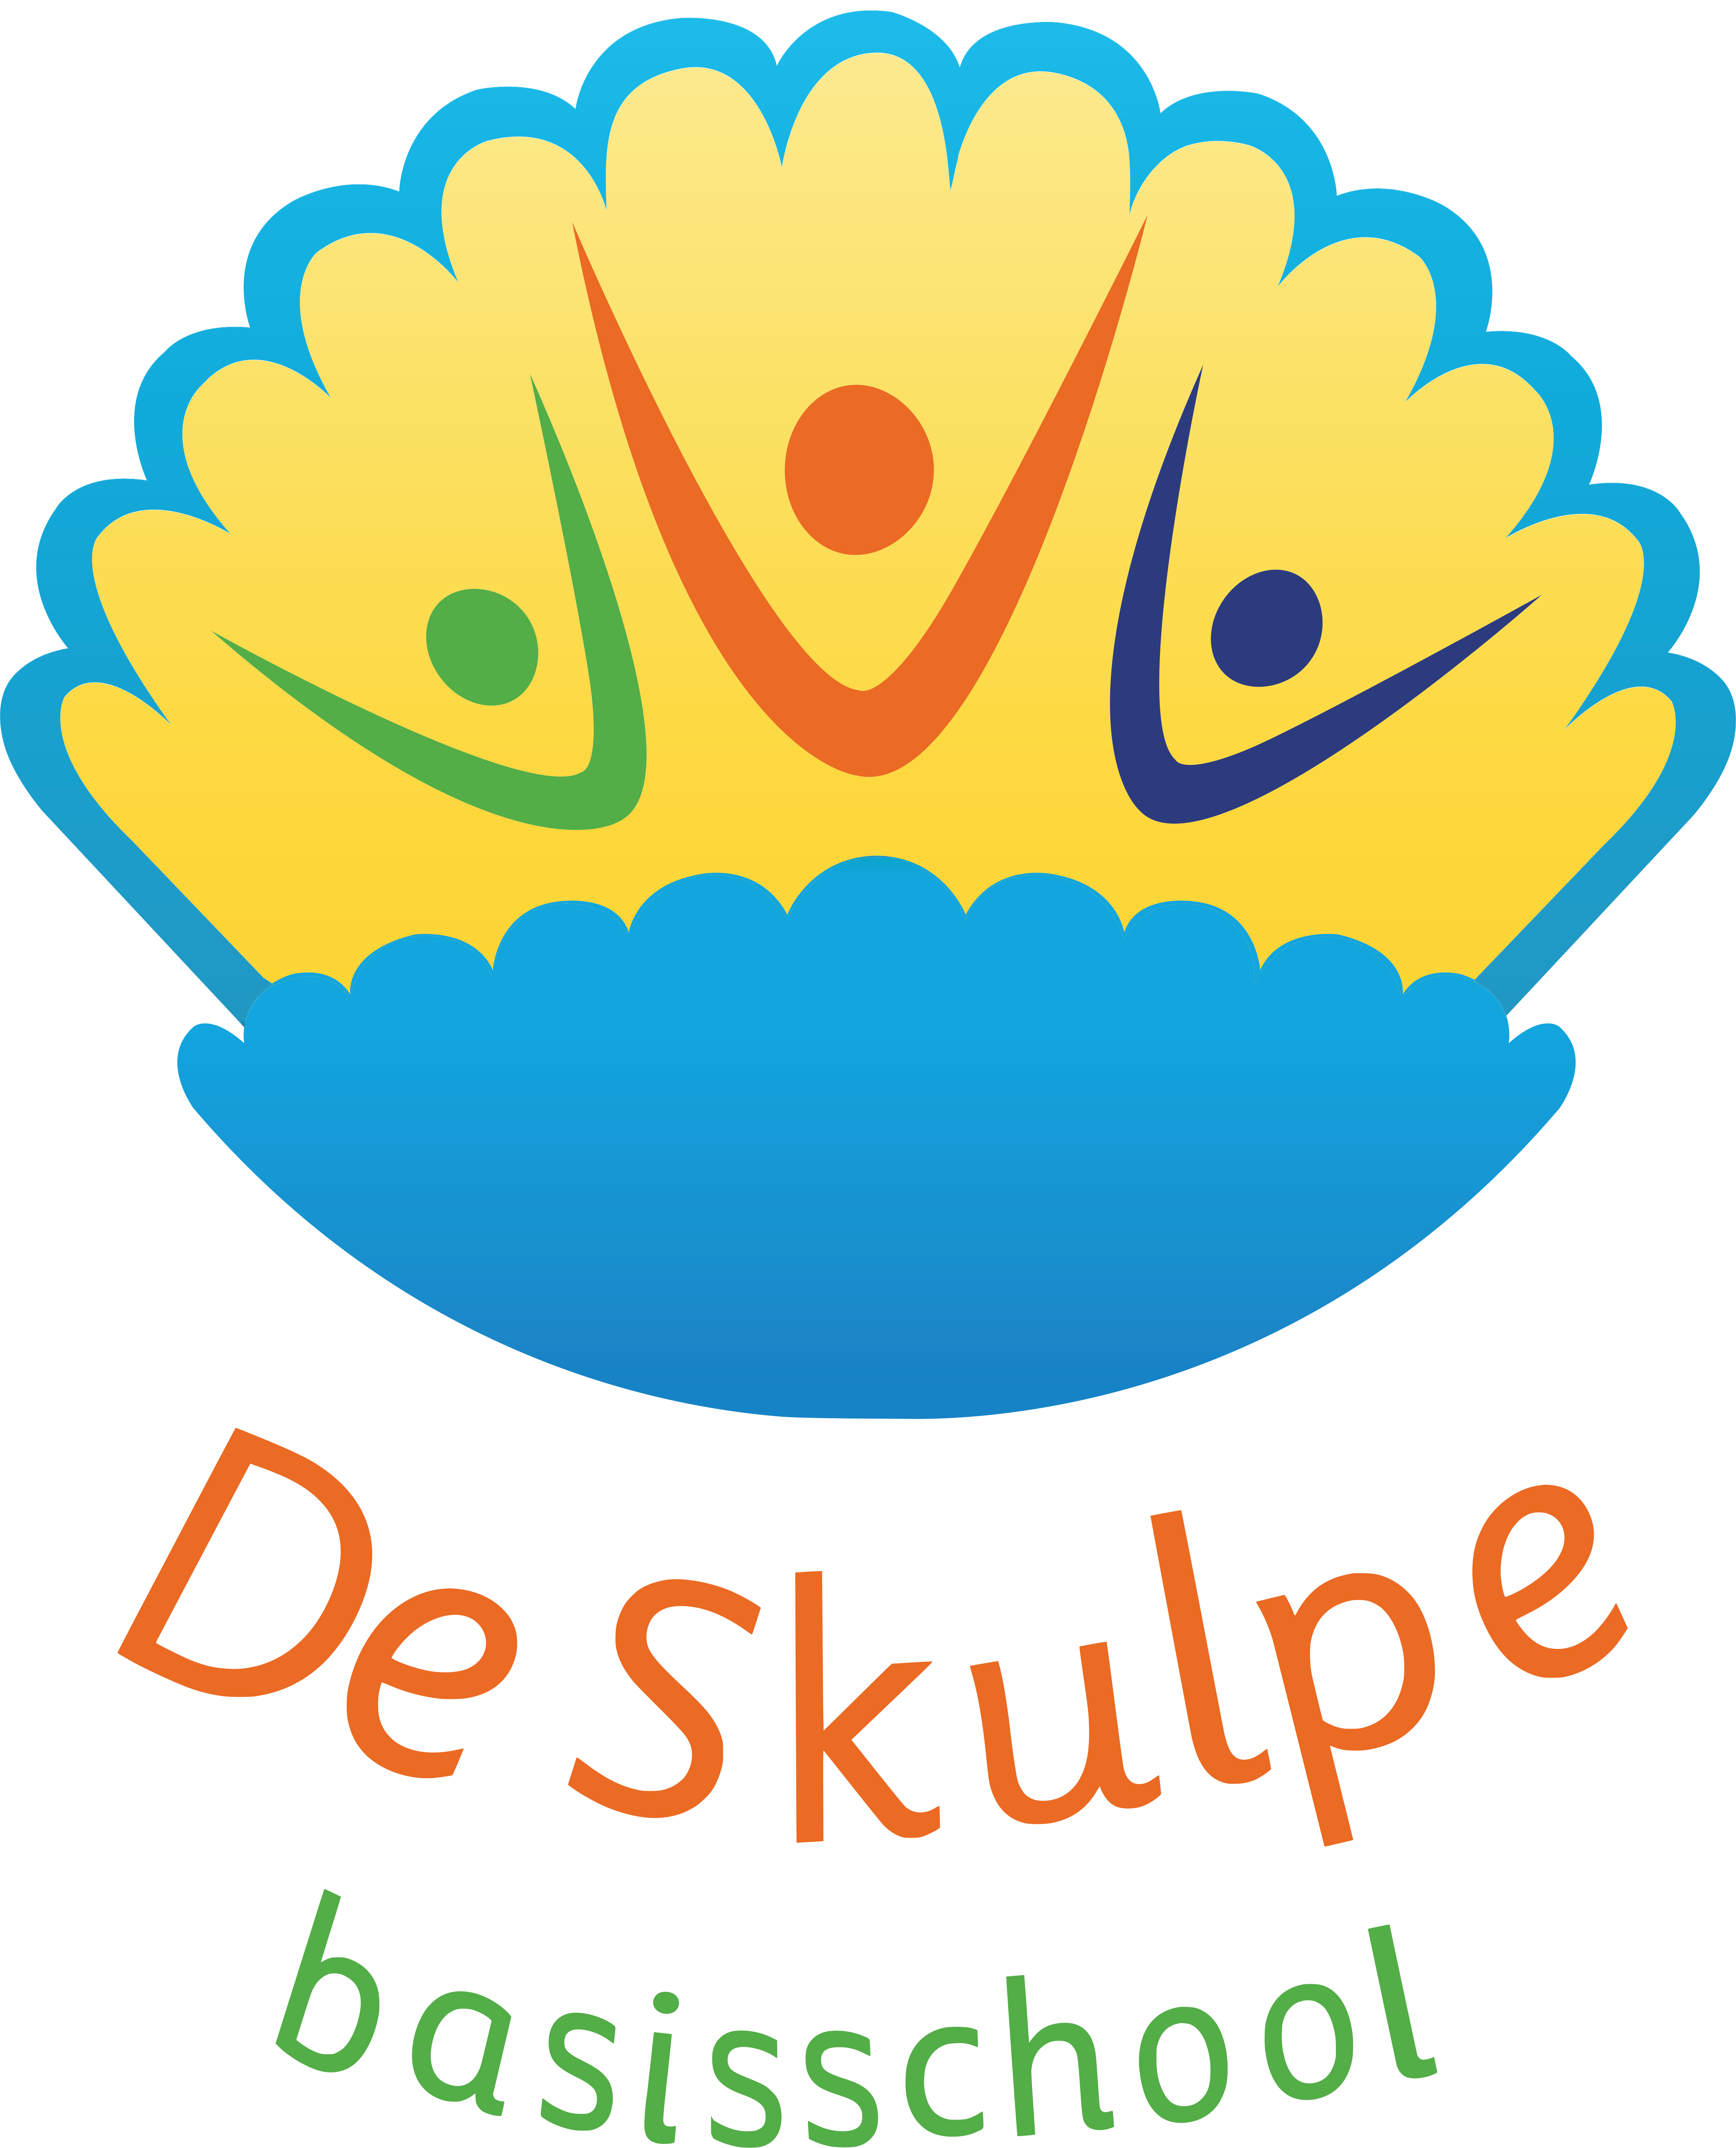 (c) Deskulpe.nl